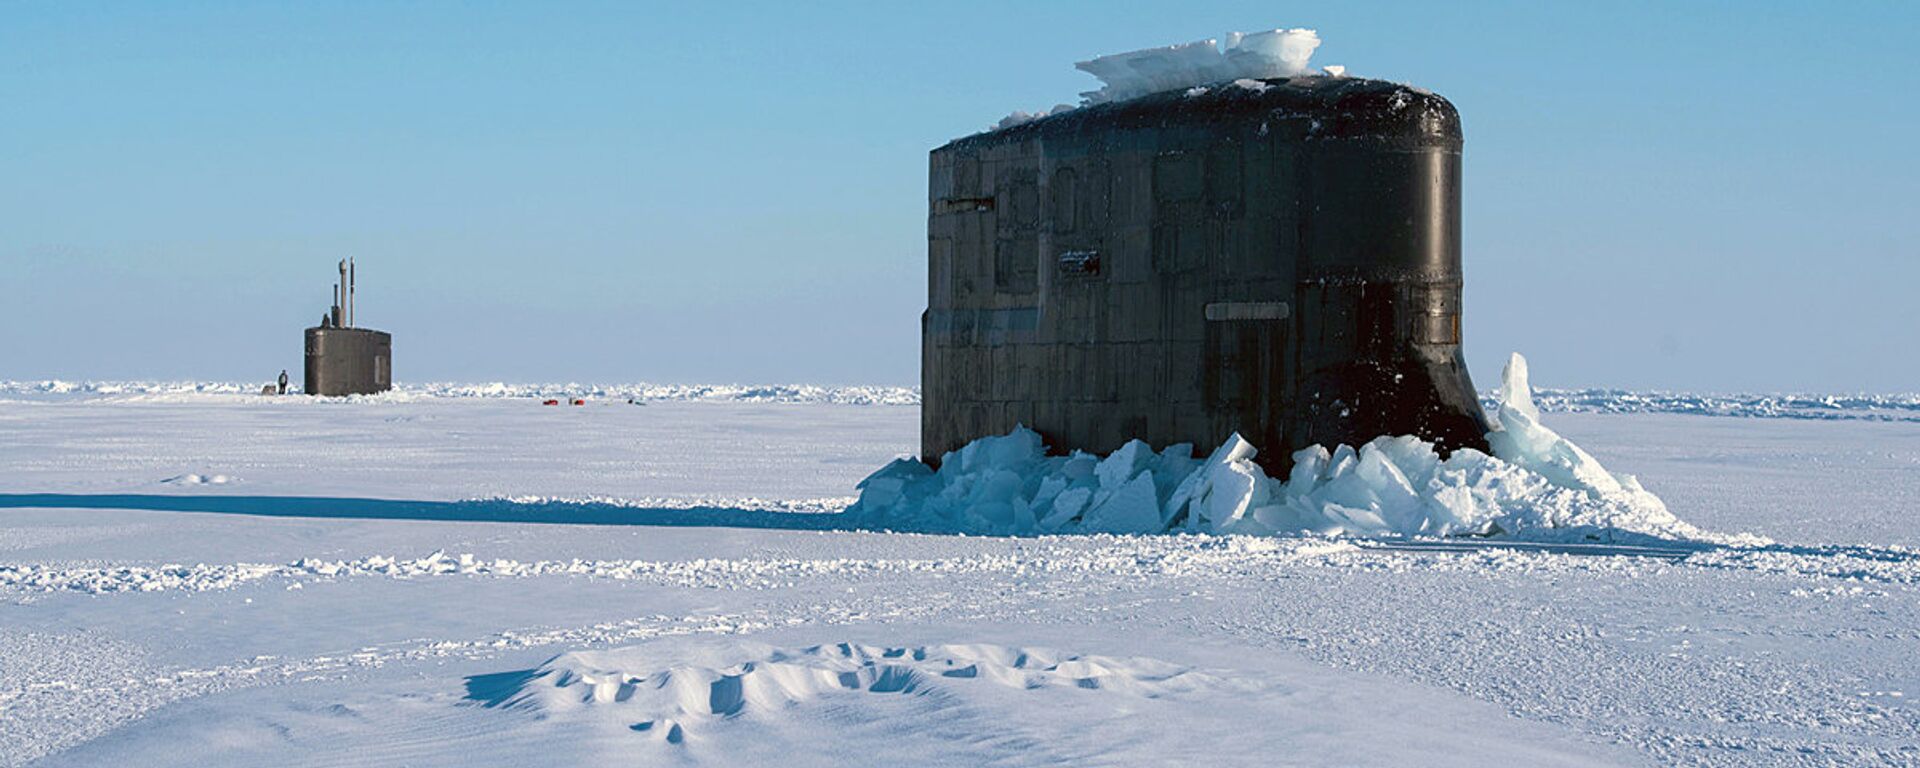 Флагман Военно-морского флота США подлодка Hartford застряла во льдах Арктики - Sputnik Узбекистан, 1920, 22.03.2018